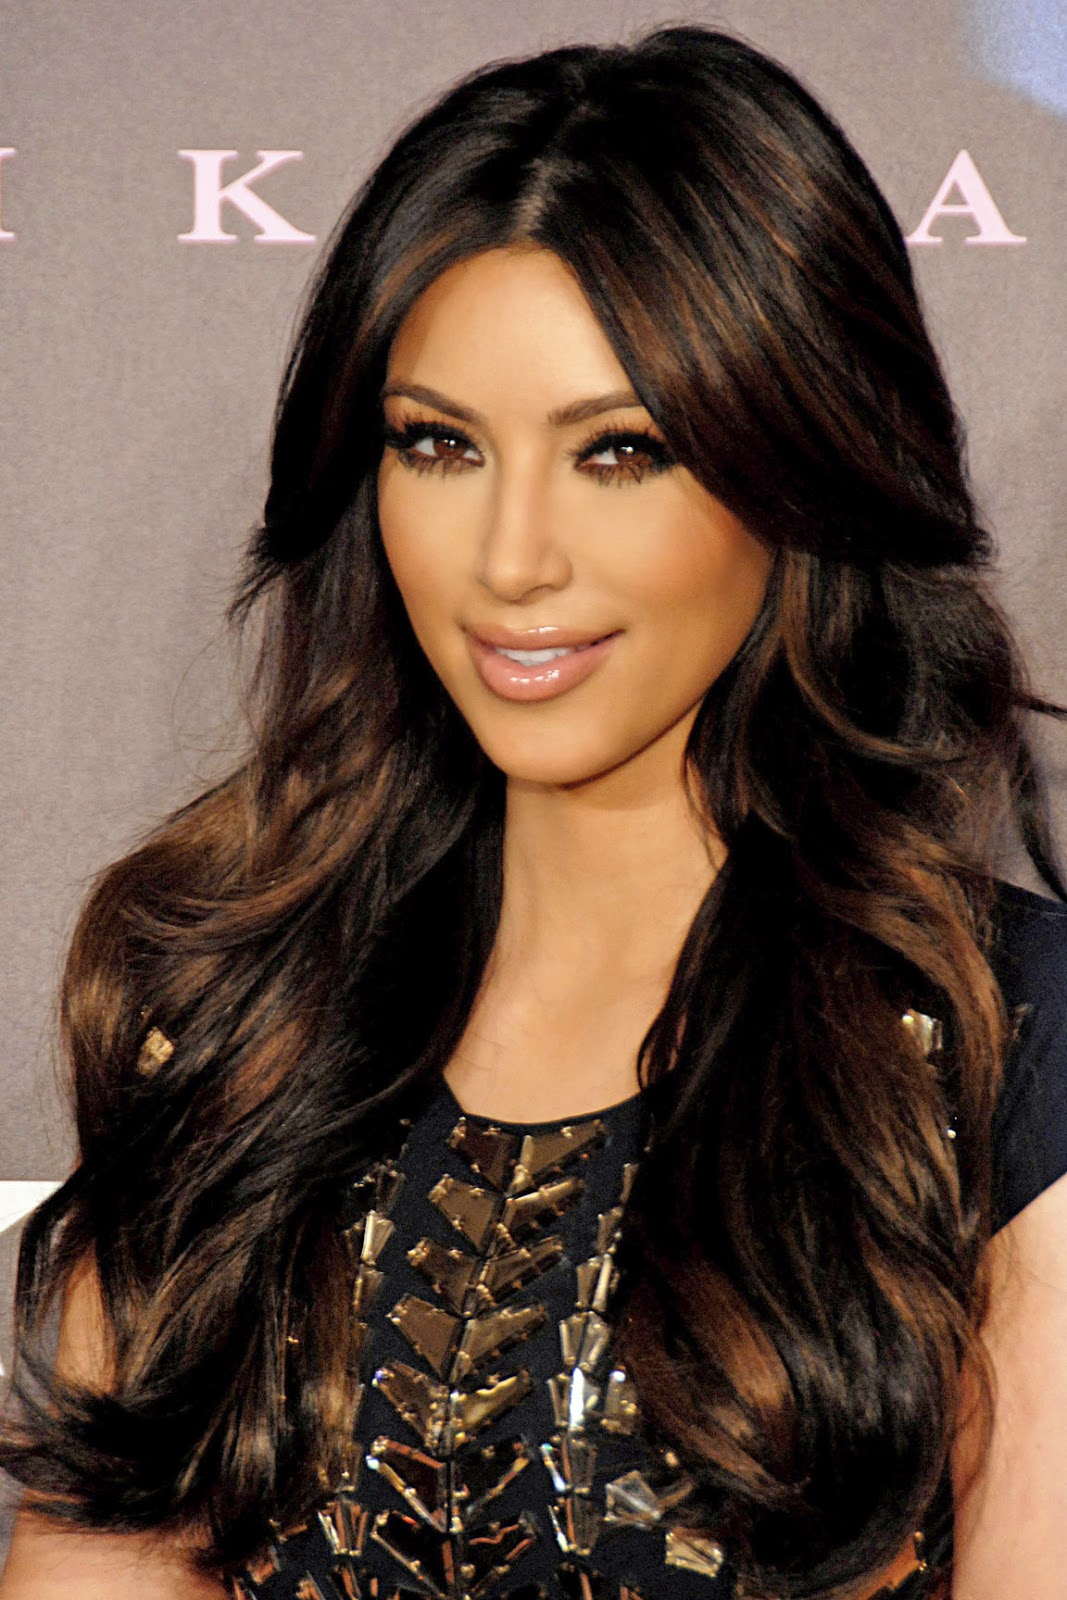 Kim Kardashian Hot looks,photo shoot, Lifestyle, Net Worth 